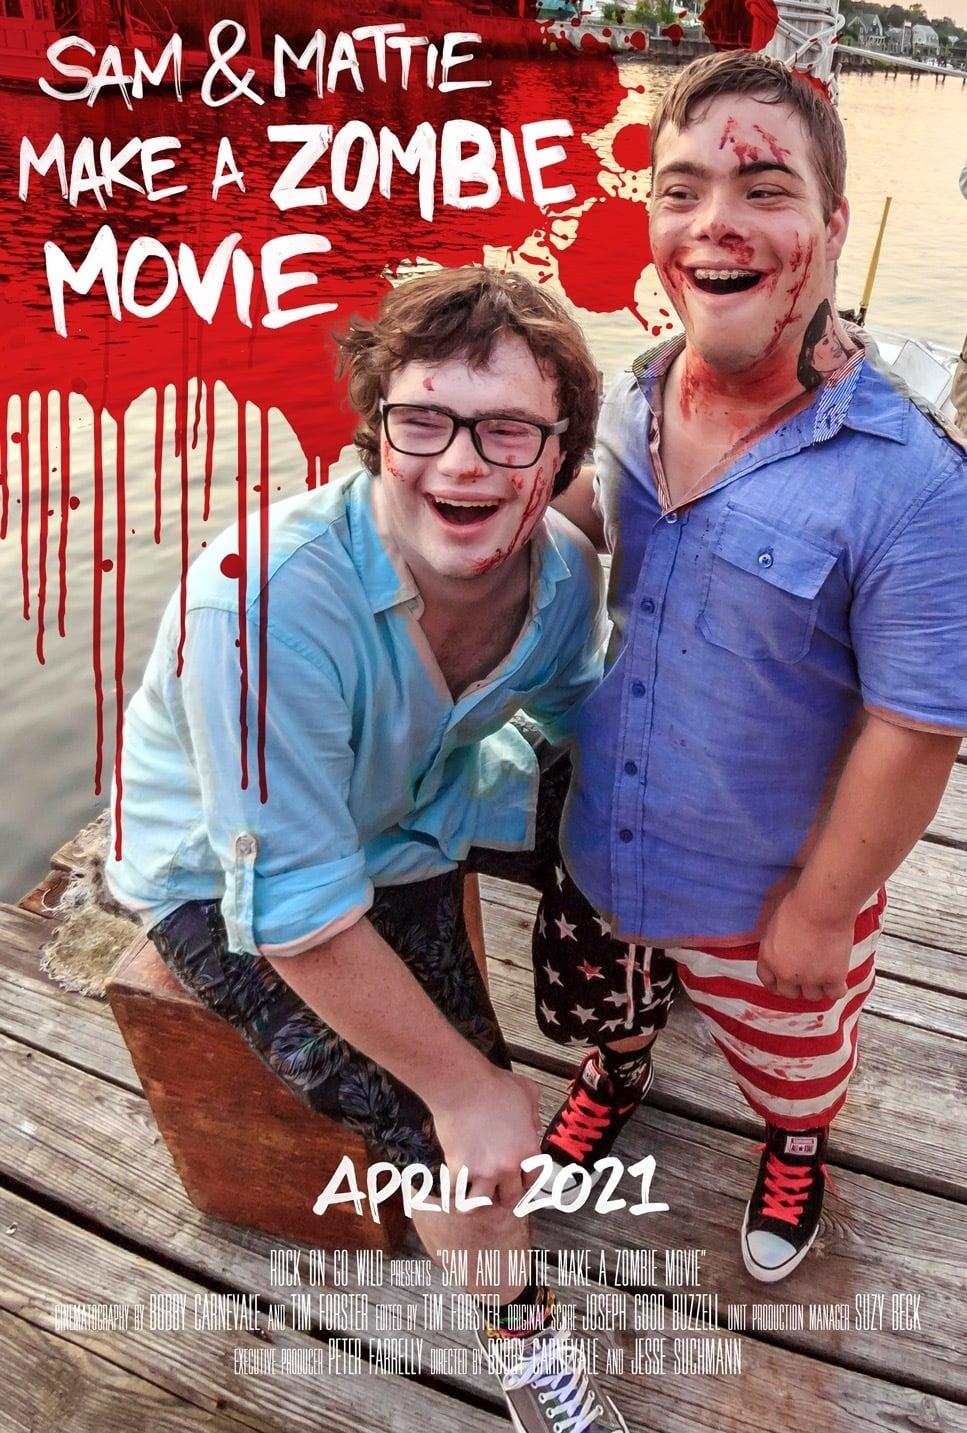 Sam & Mattie Make a Zombie Movie poster